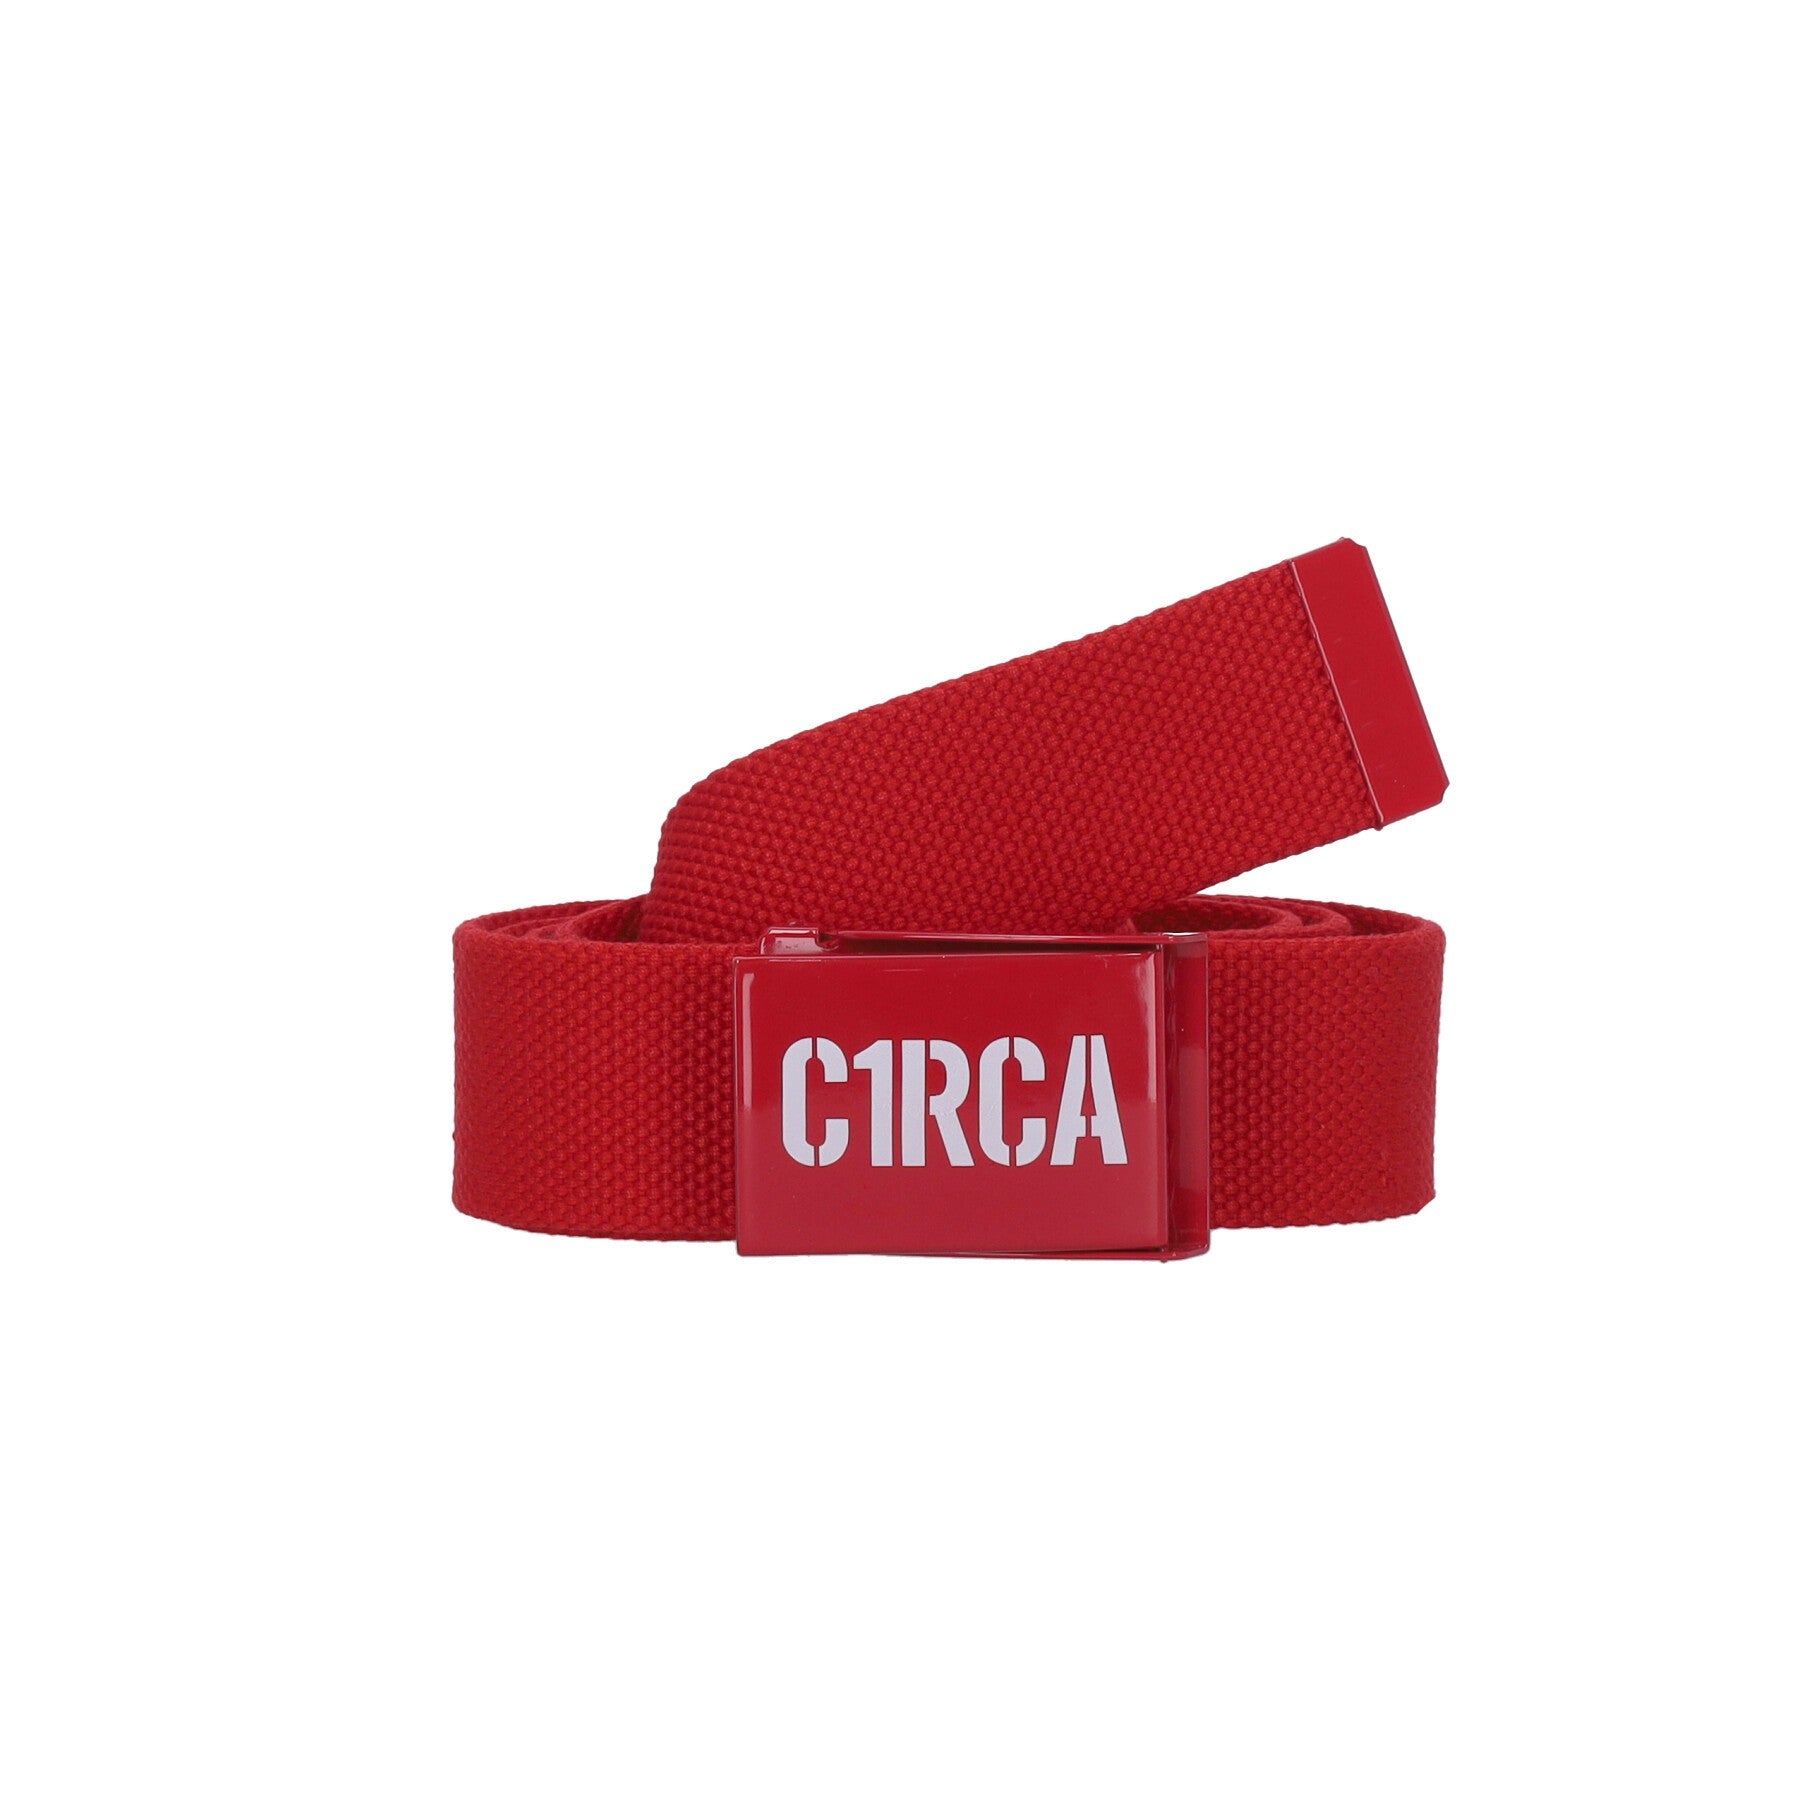 C1rca, Cintura Uomo Peacemaker Belt, Red/white